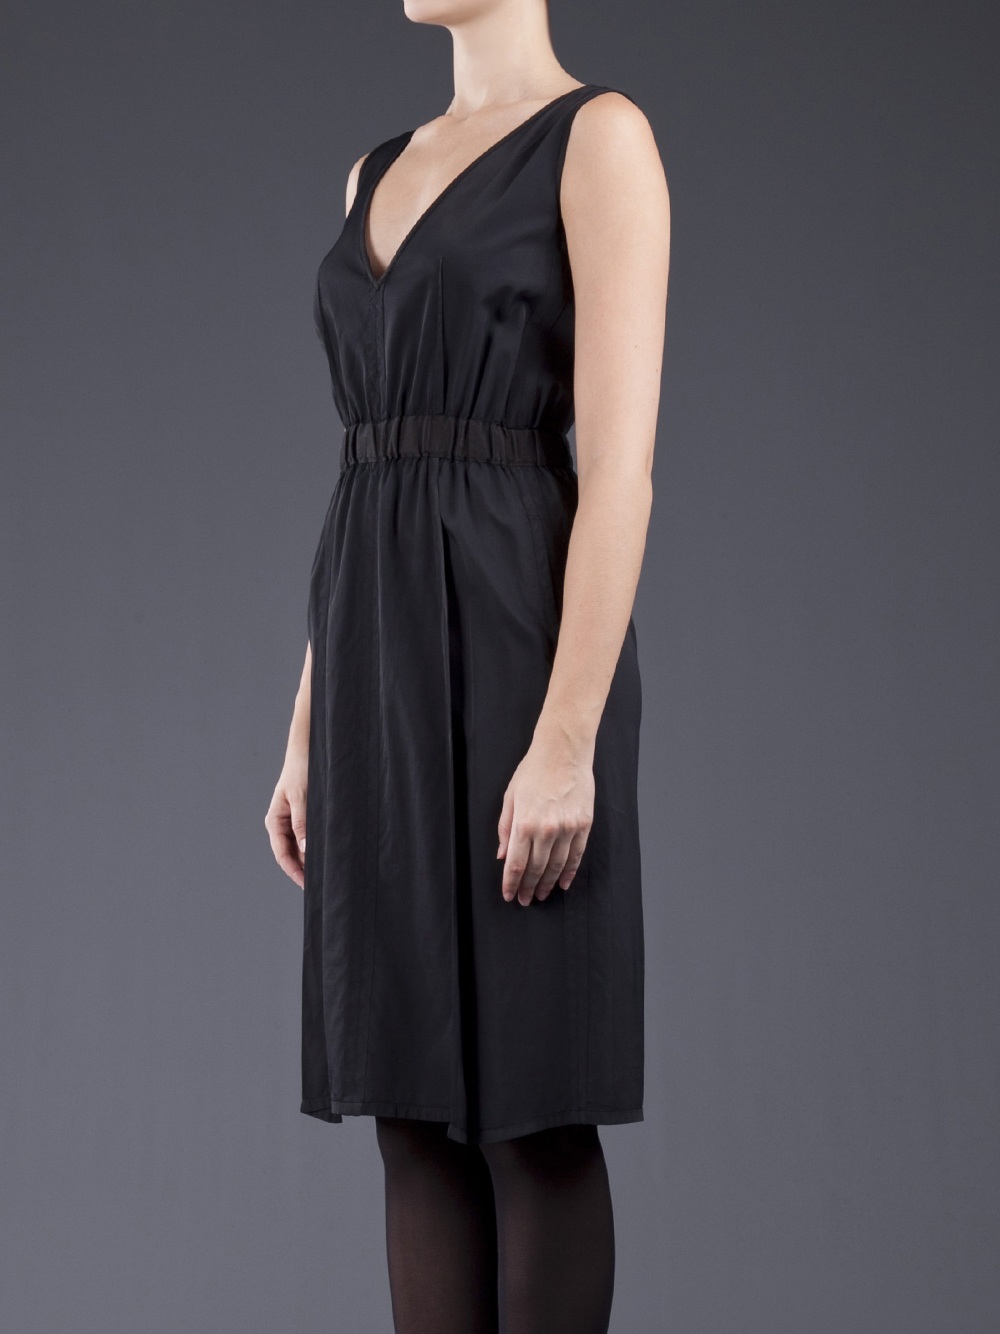 Lyst - Mm6 By Maison Martin Margiela Sleeveless Shift Dress in Black